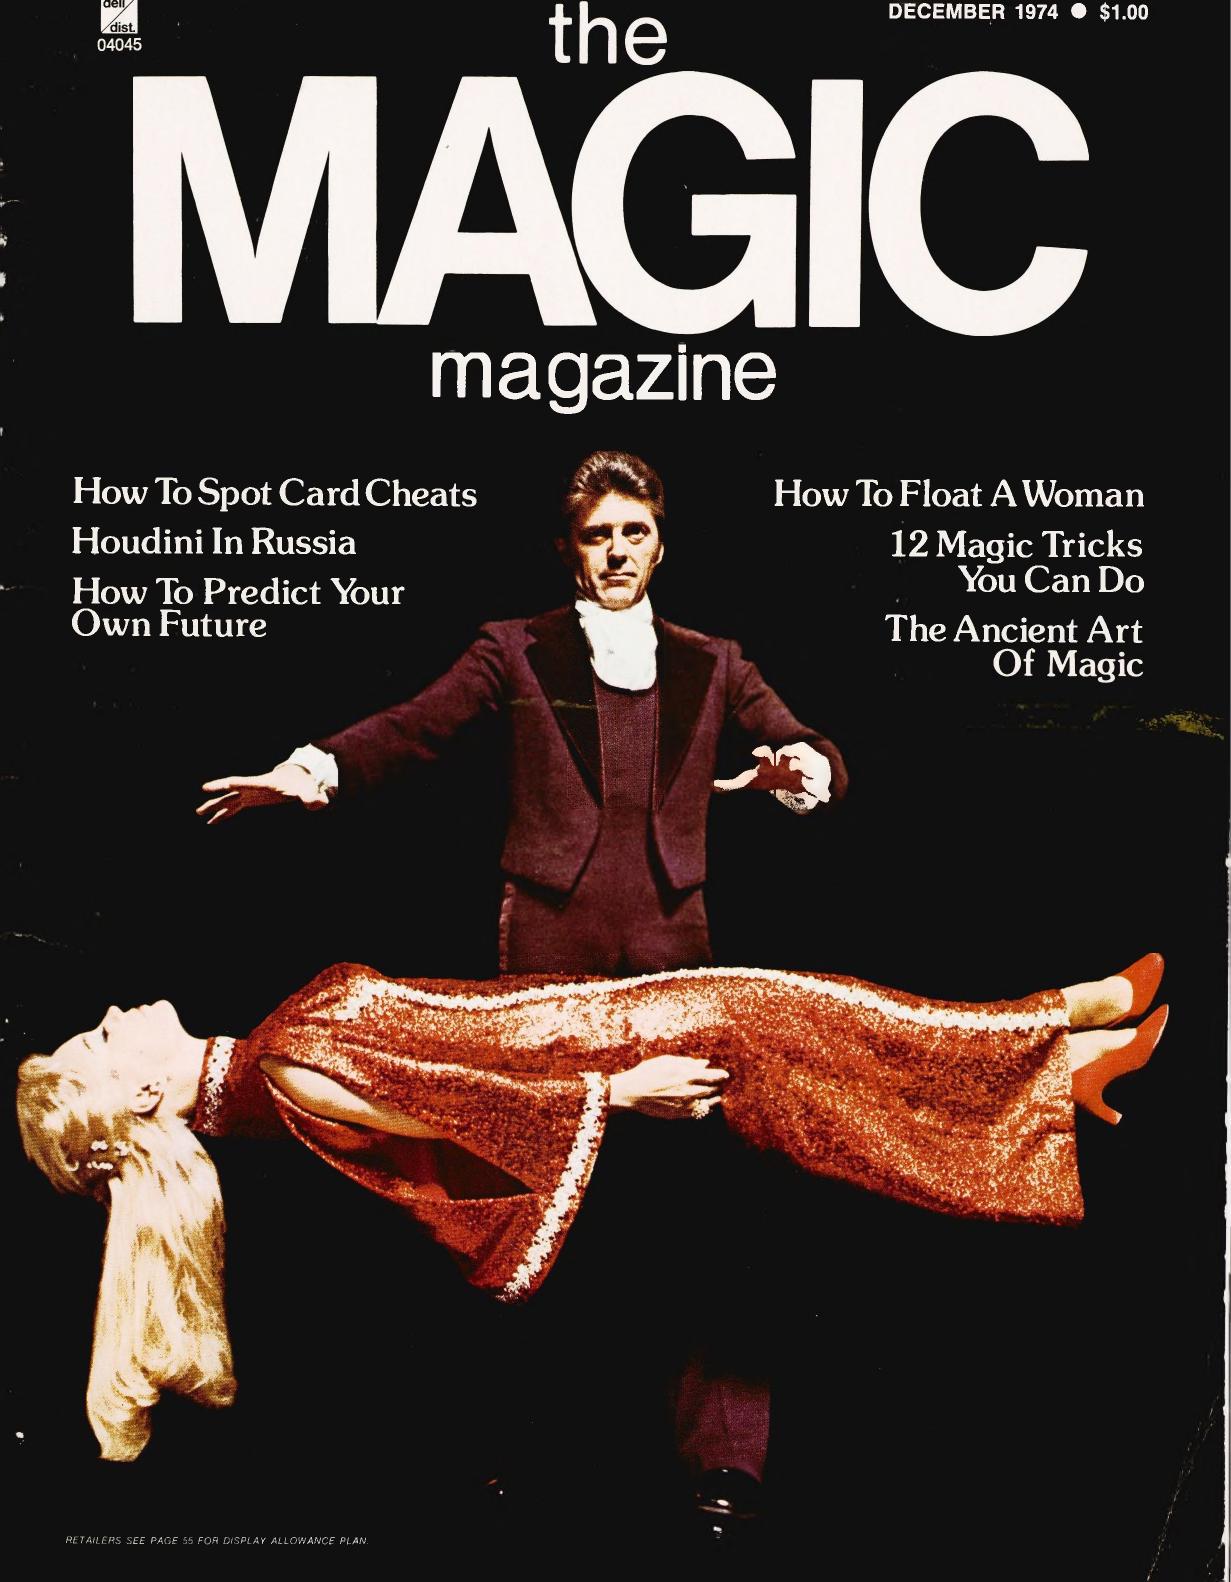 MAGIC Magazine Review